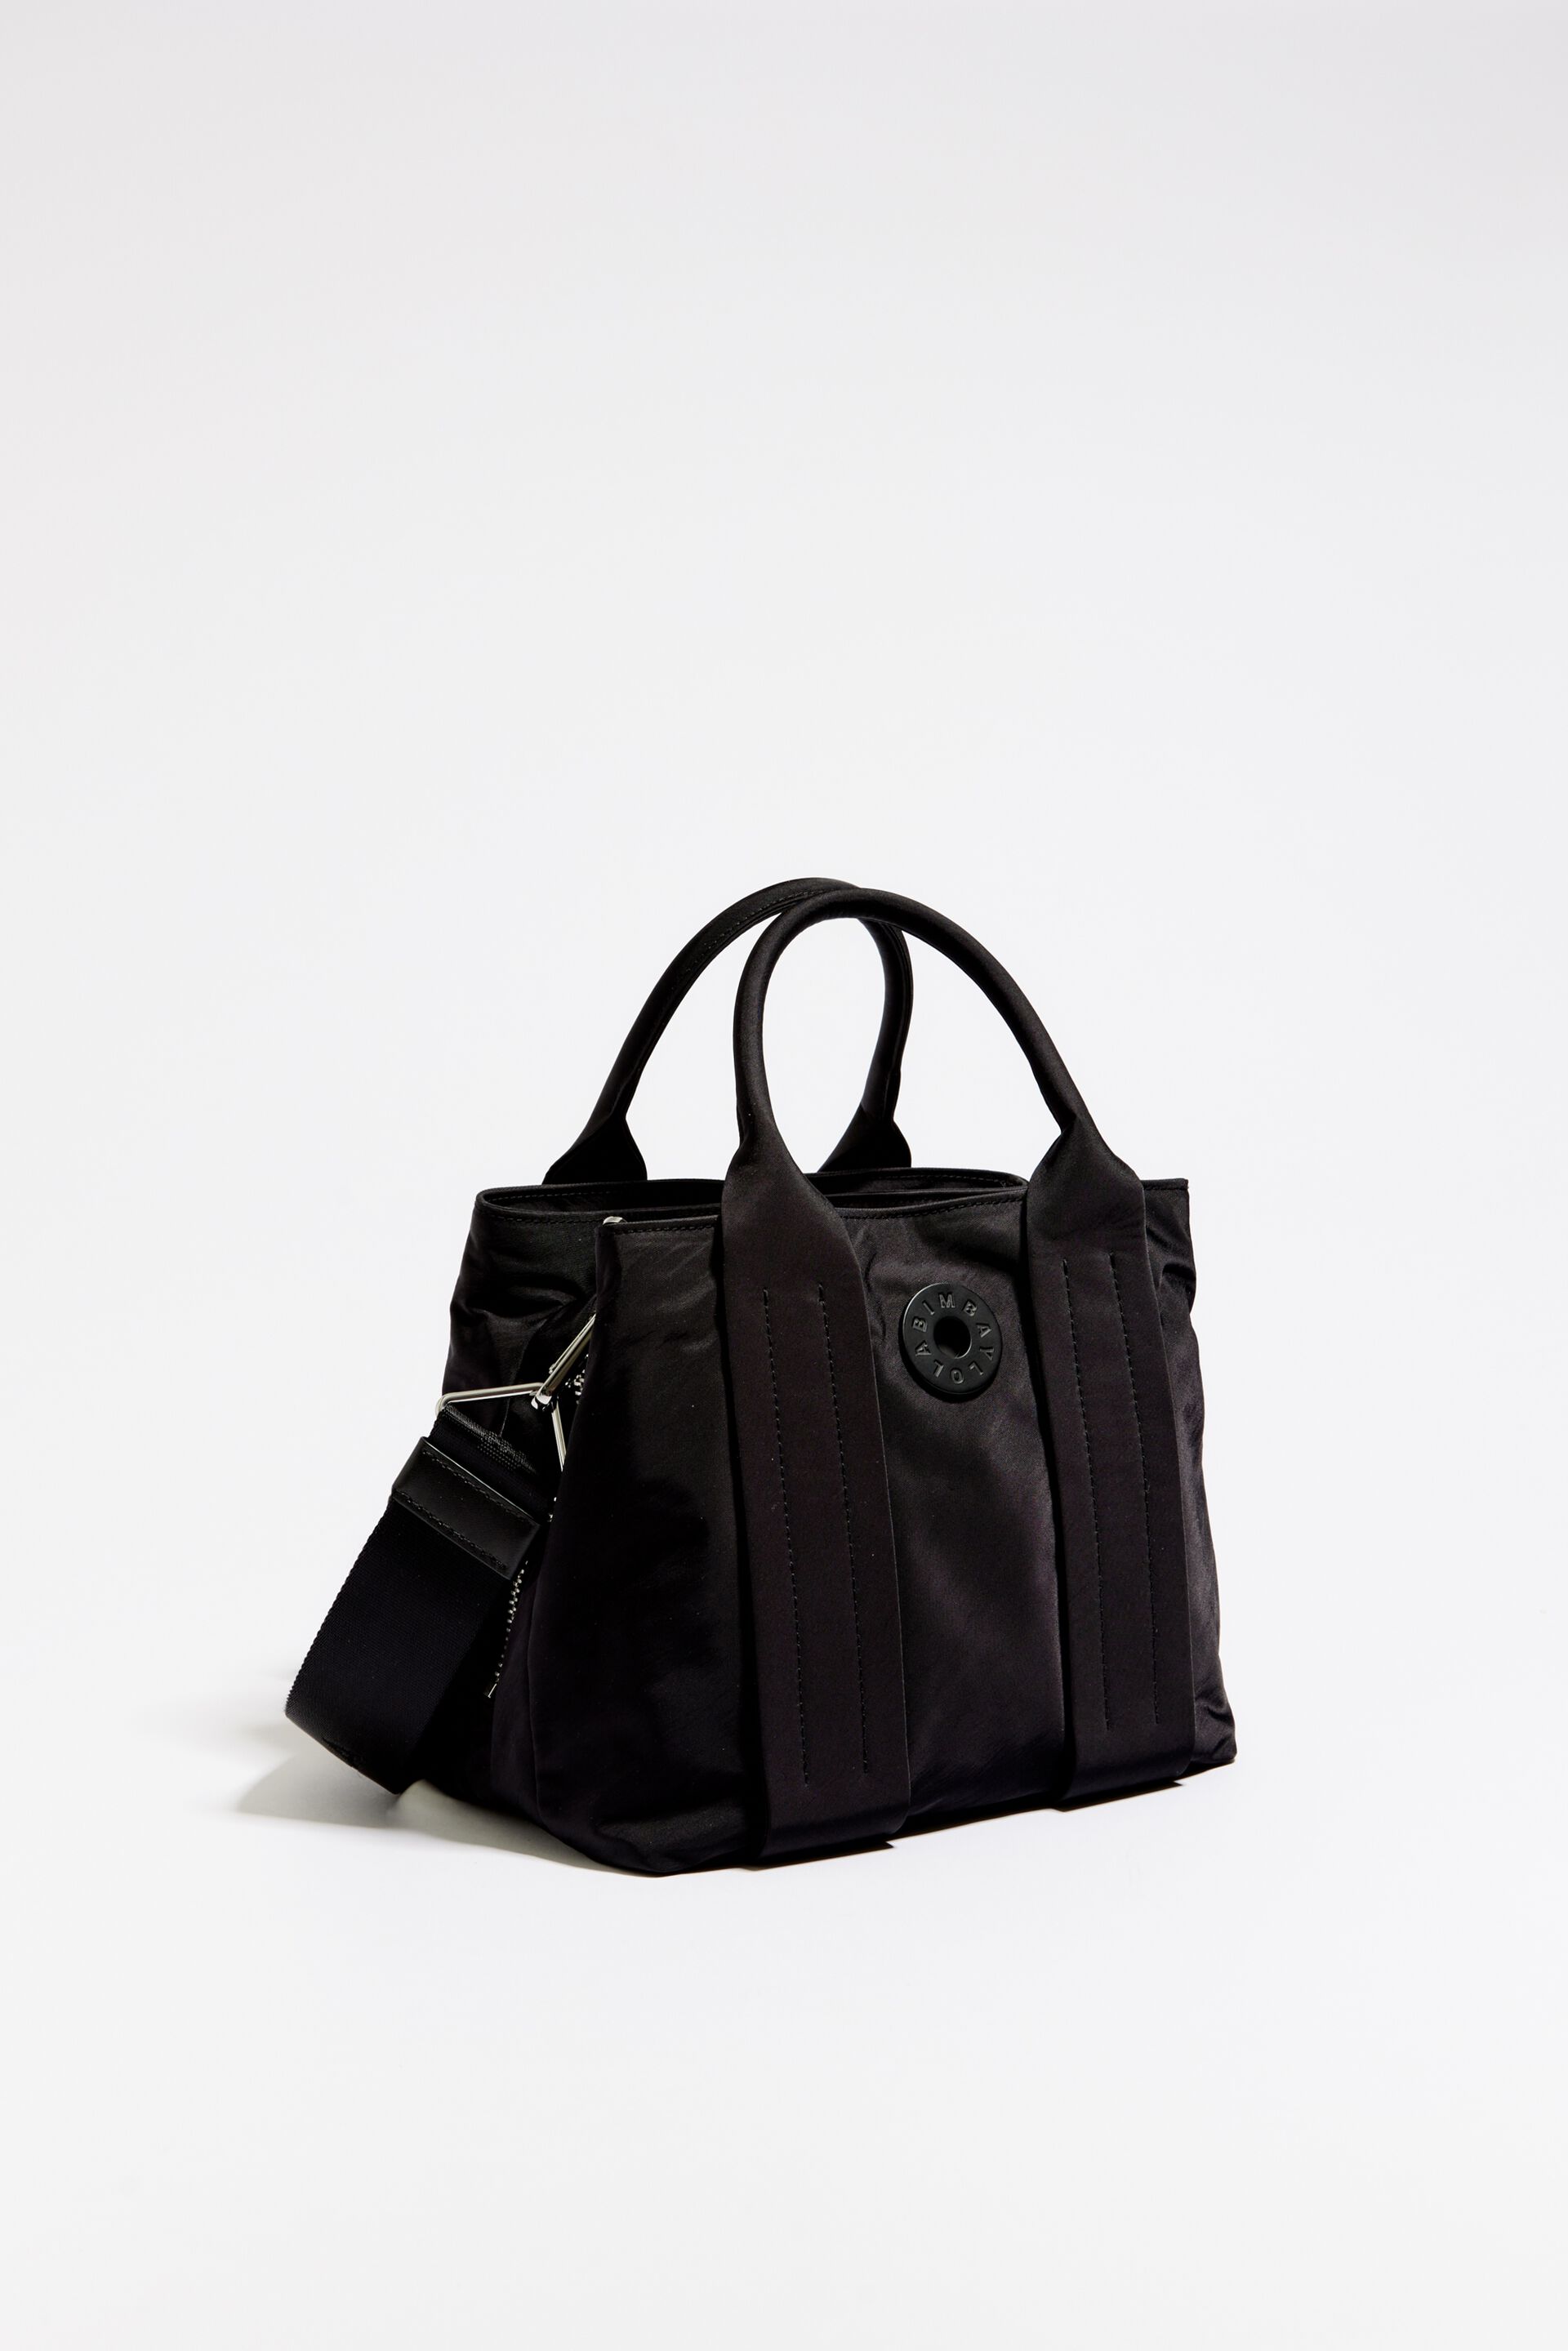 S black leather Pelota bag